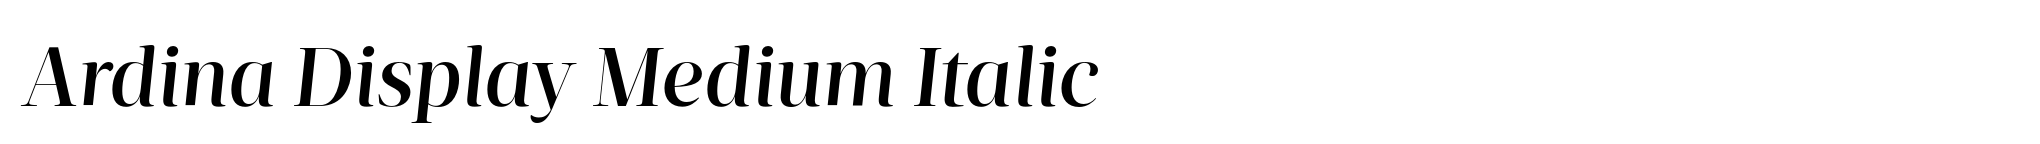 Ardina Display Medium Italic image